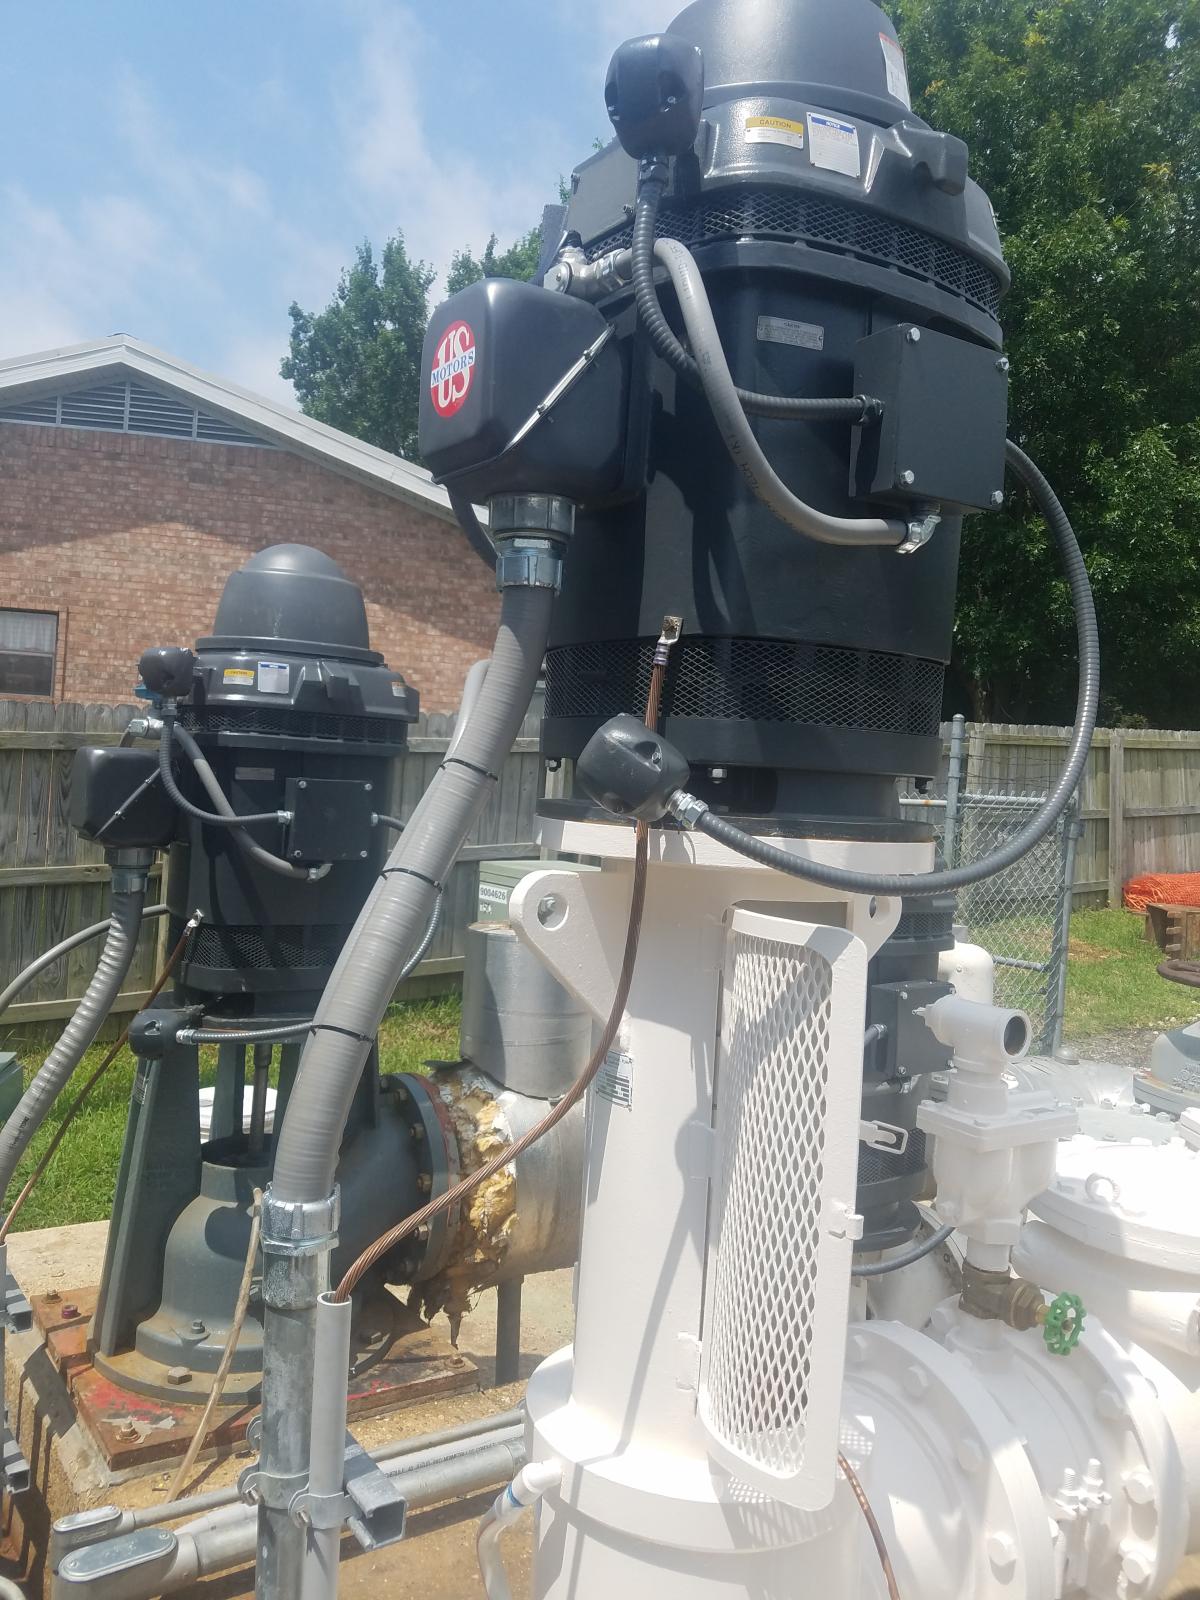 East Cedar Creek FWSD Raw Water Pump Station Improvements